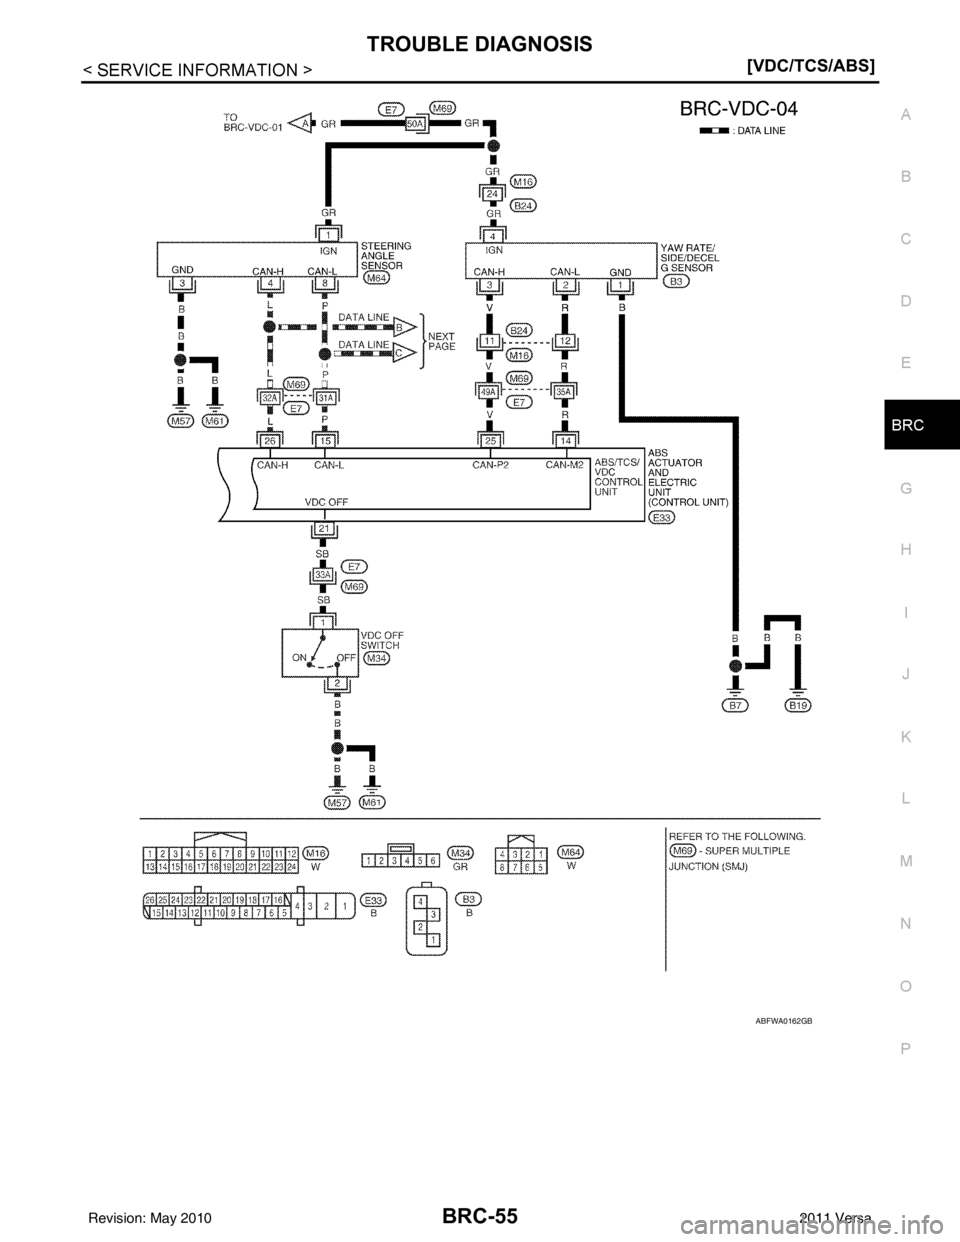 NISSAN LATIO 2011  Service Repair Manual TROUBLE DIAGNOSISBRC-55
< SERVICE INFORMATION > [VDC/TCS/ABS]
C
D
E
G H
I
J
K L
M A
B
BRC
N
O P
ABFWA0162GB
Revision: May 2010 2011 Versa 